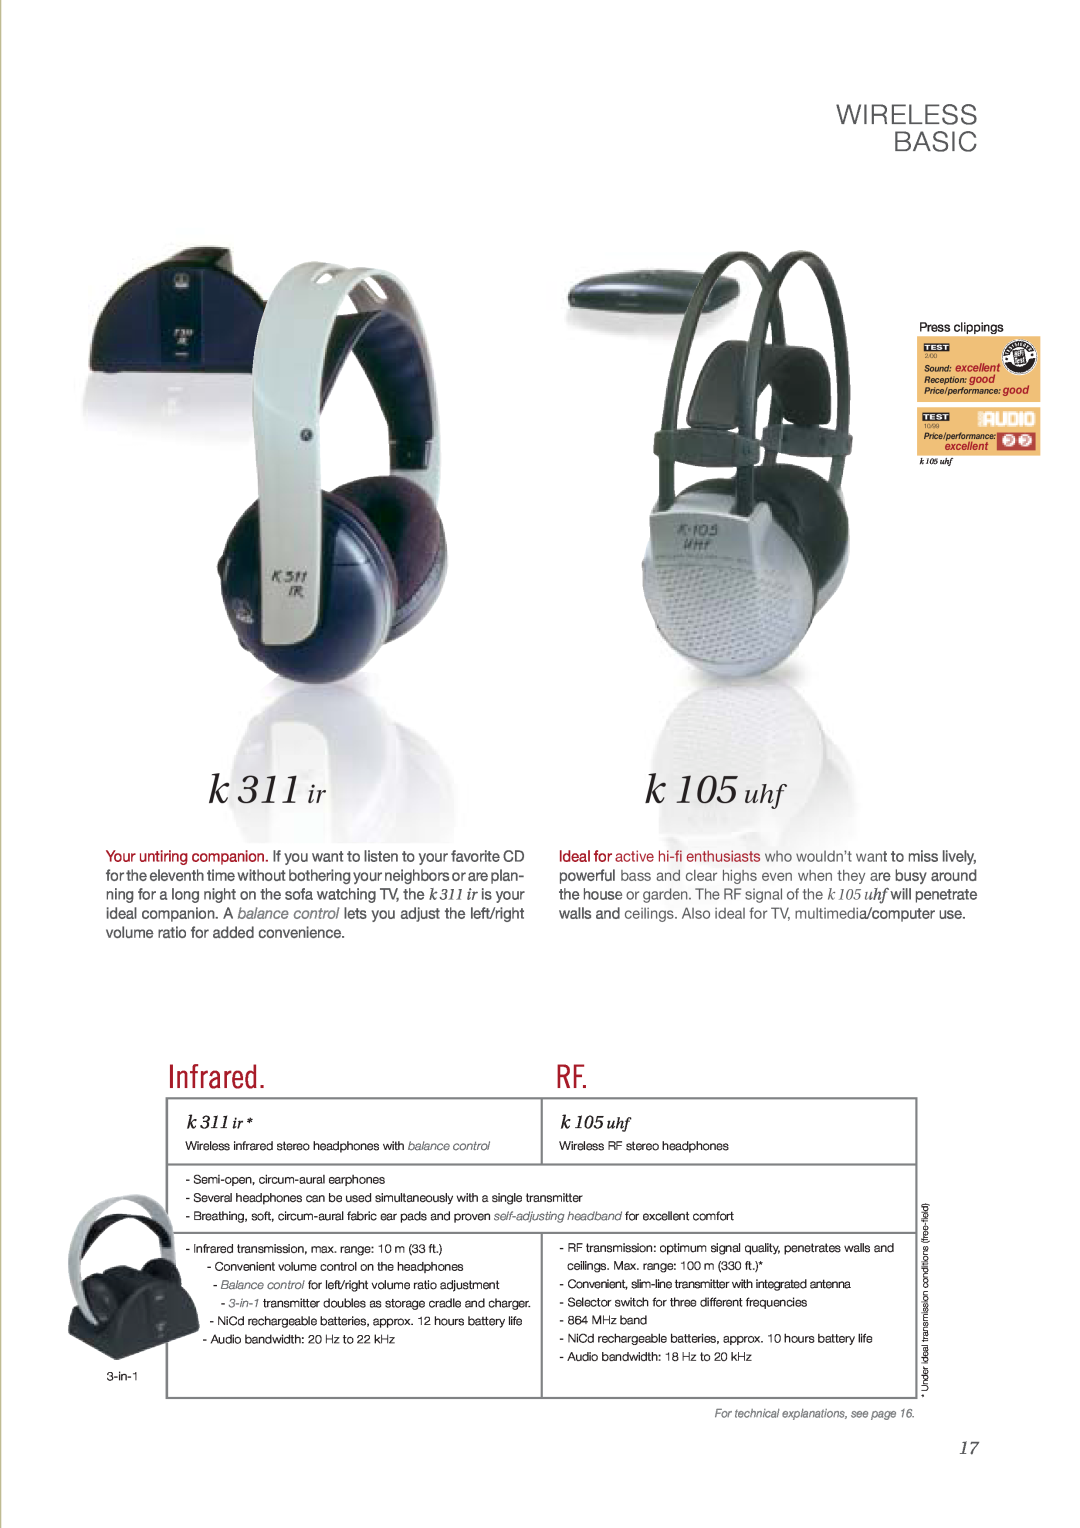 AKG Acoustics surround headphones manual k 311 ir, k 105 uhf, Infrared, Wireless Basic, Sound excellent 